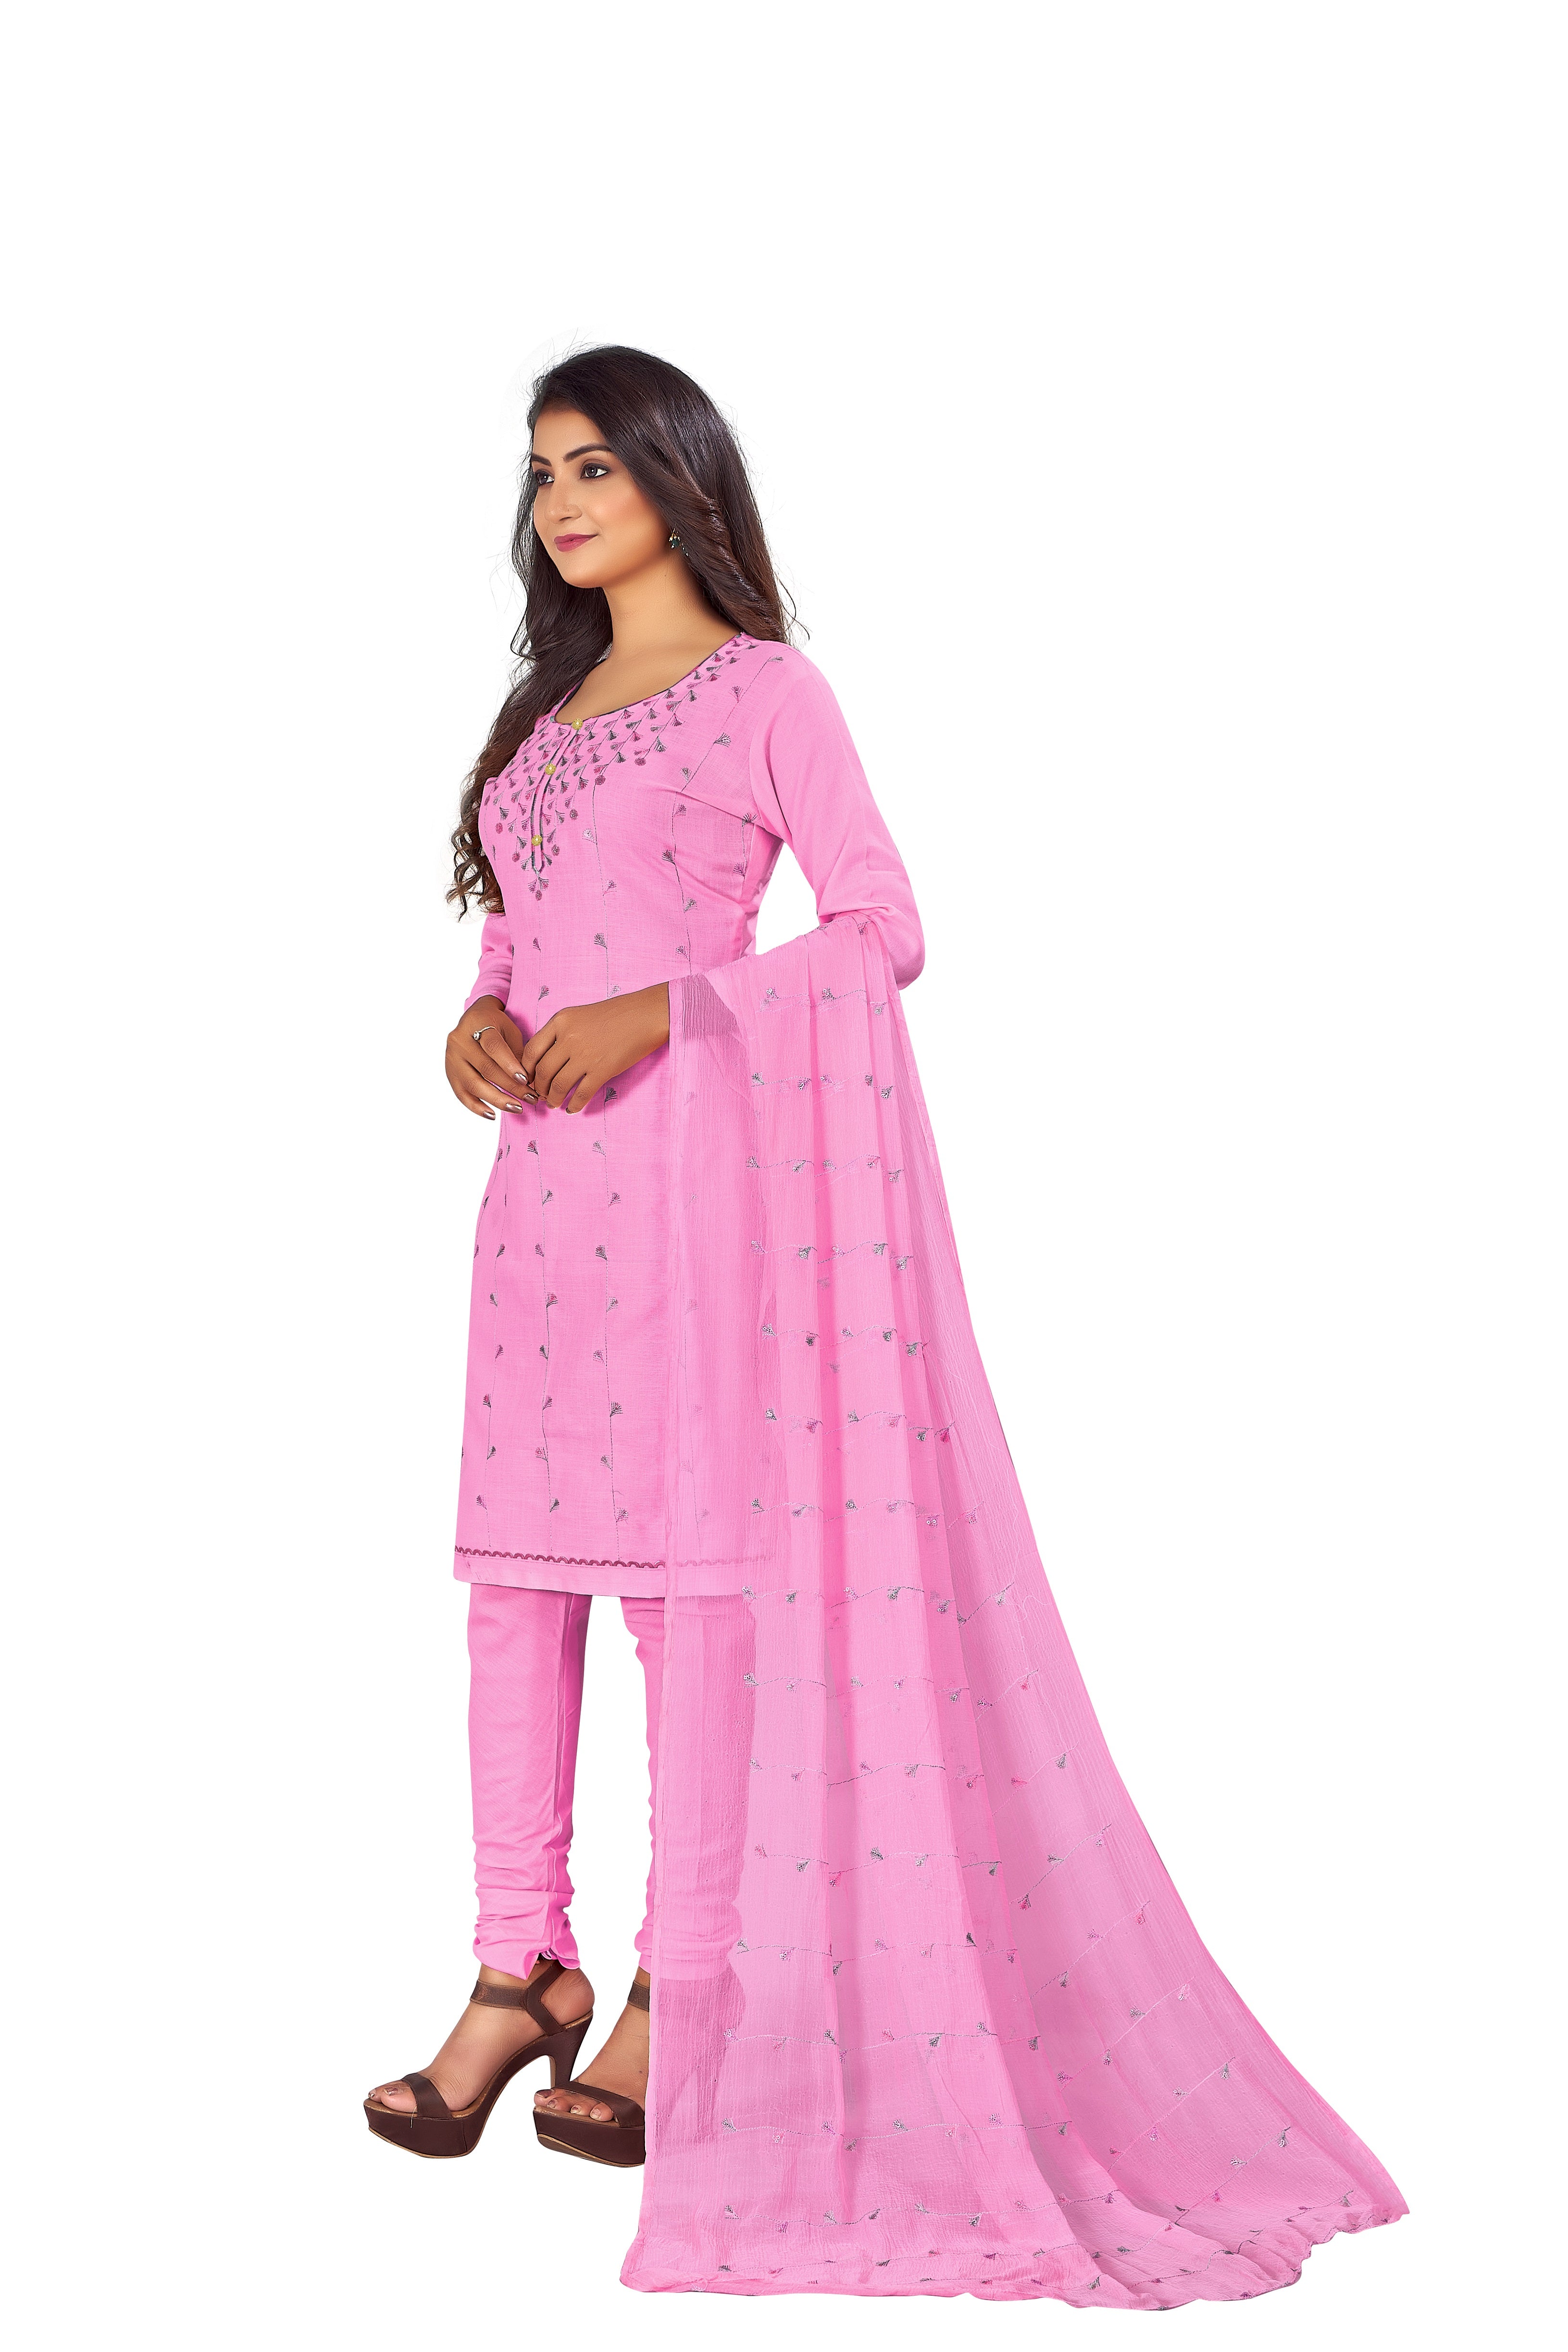 Women's Pink Colour Semi-Stitched Suit Sets - Dwija Fashion